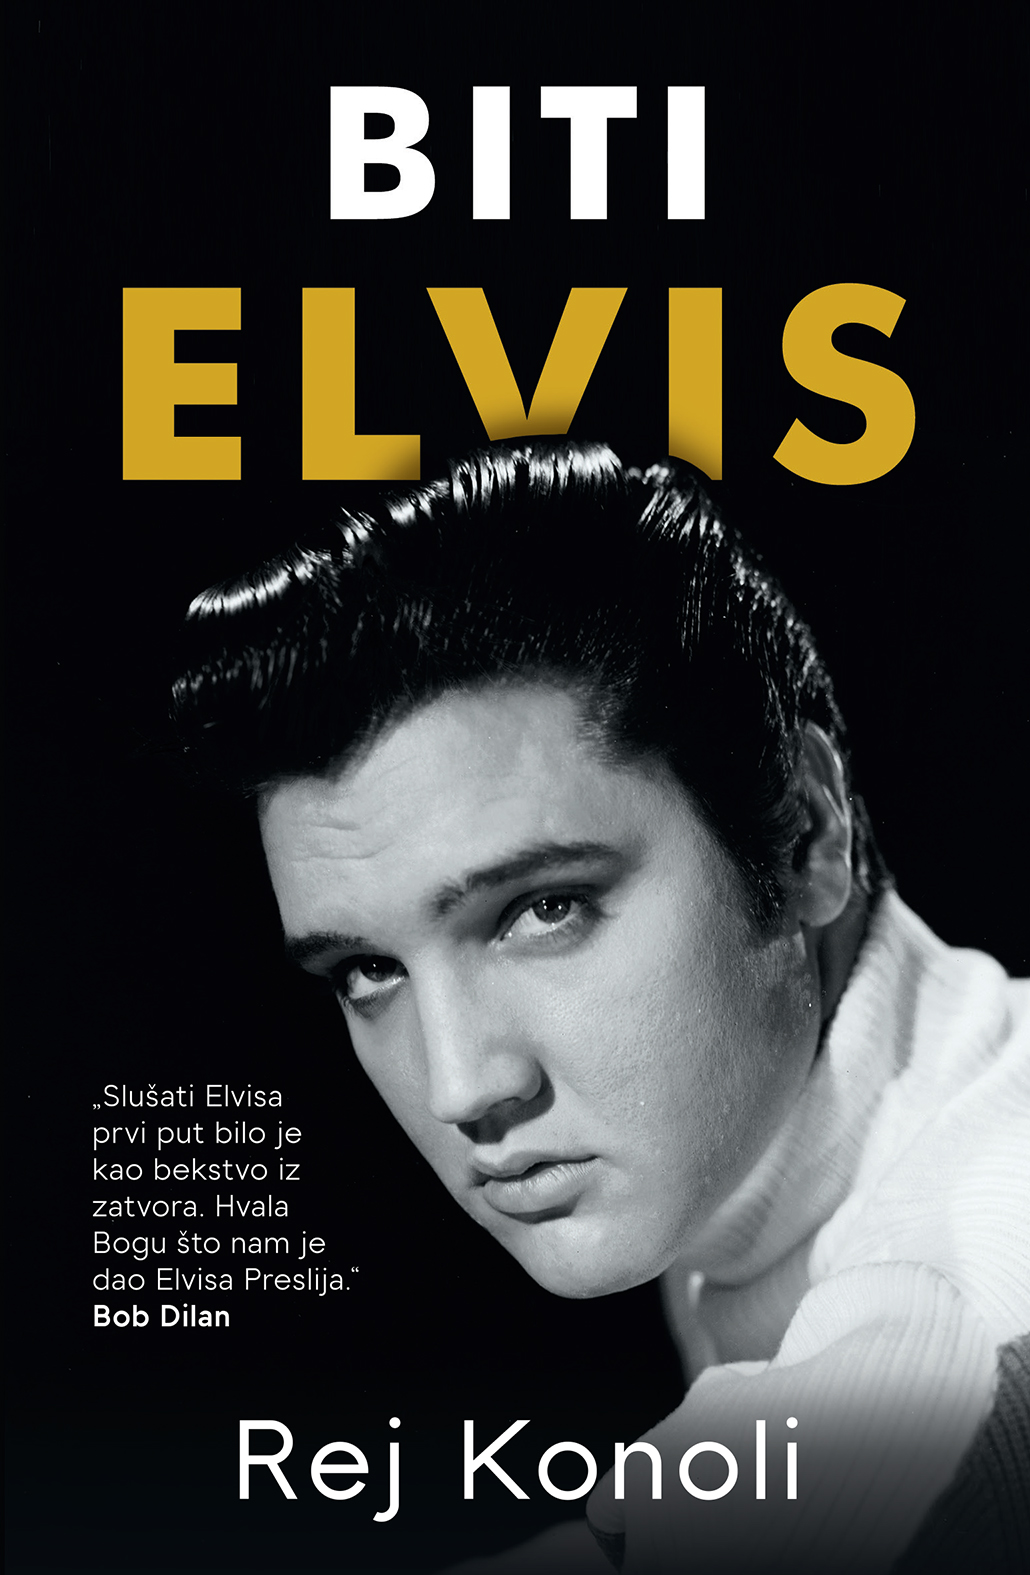 Biti Elvis, foto: Promo Laguna